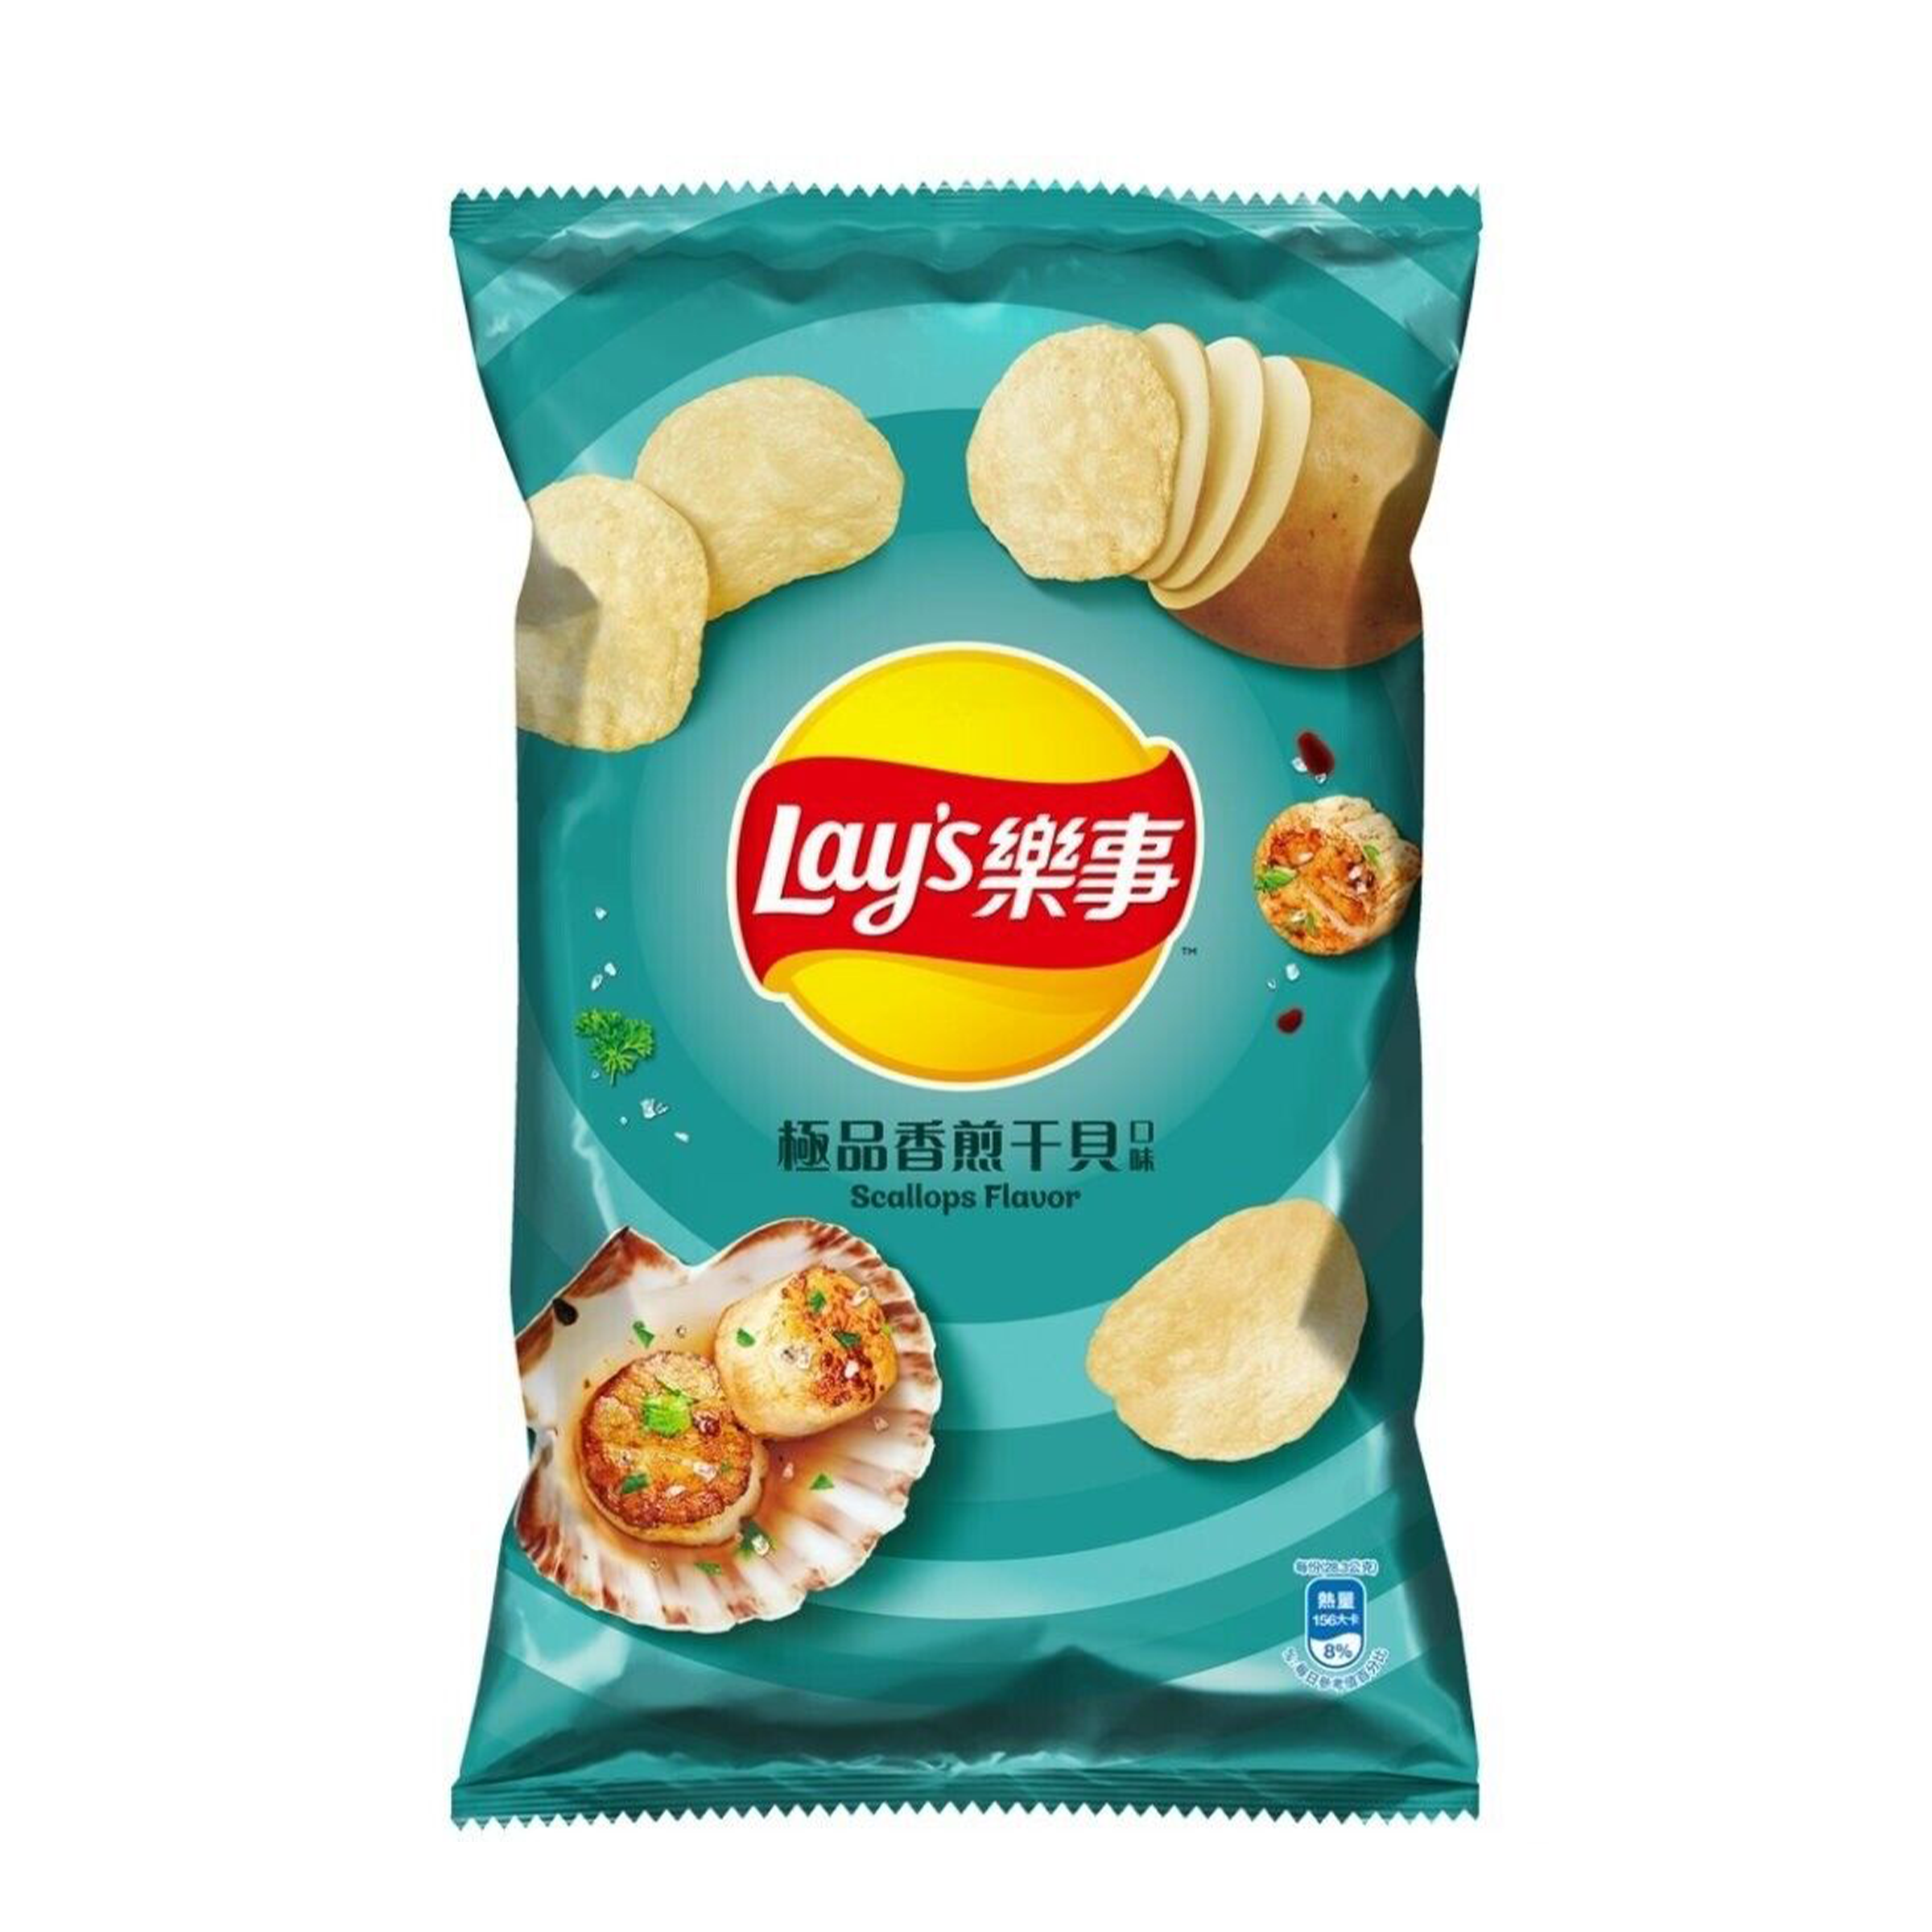 Lays - Scallops Flavor (Asia)